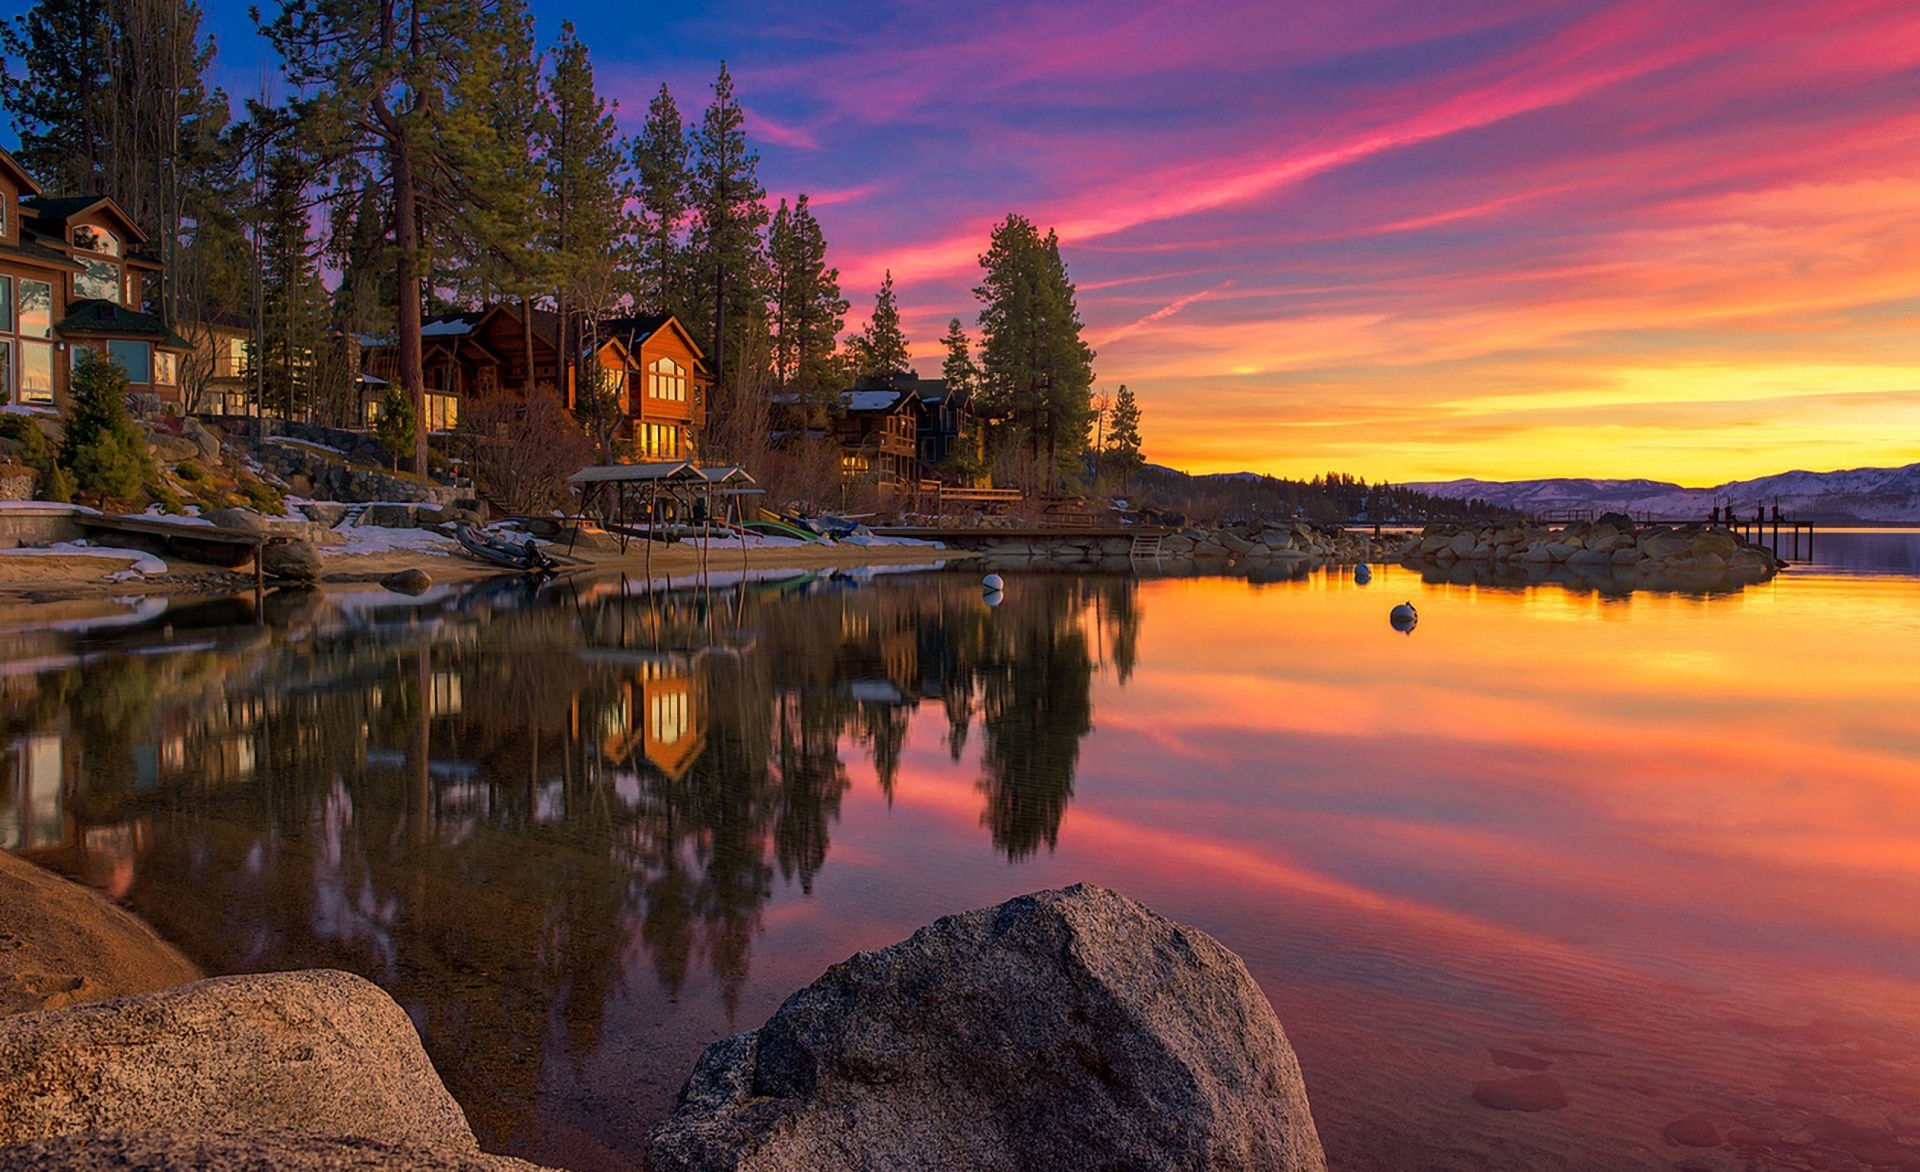 Lake Tahoe Summer Cabins Wallpaper Hd Media File Pixelstalk